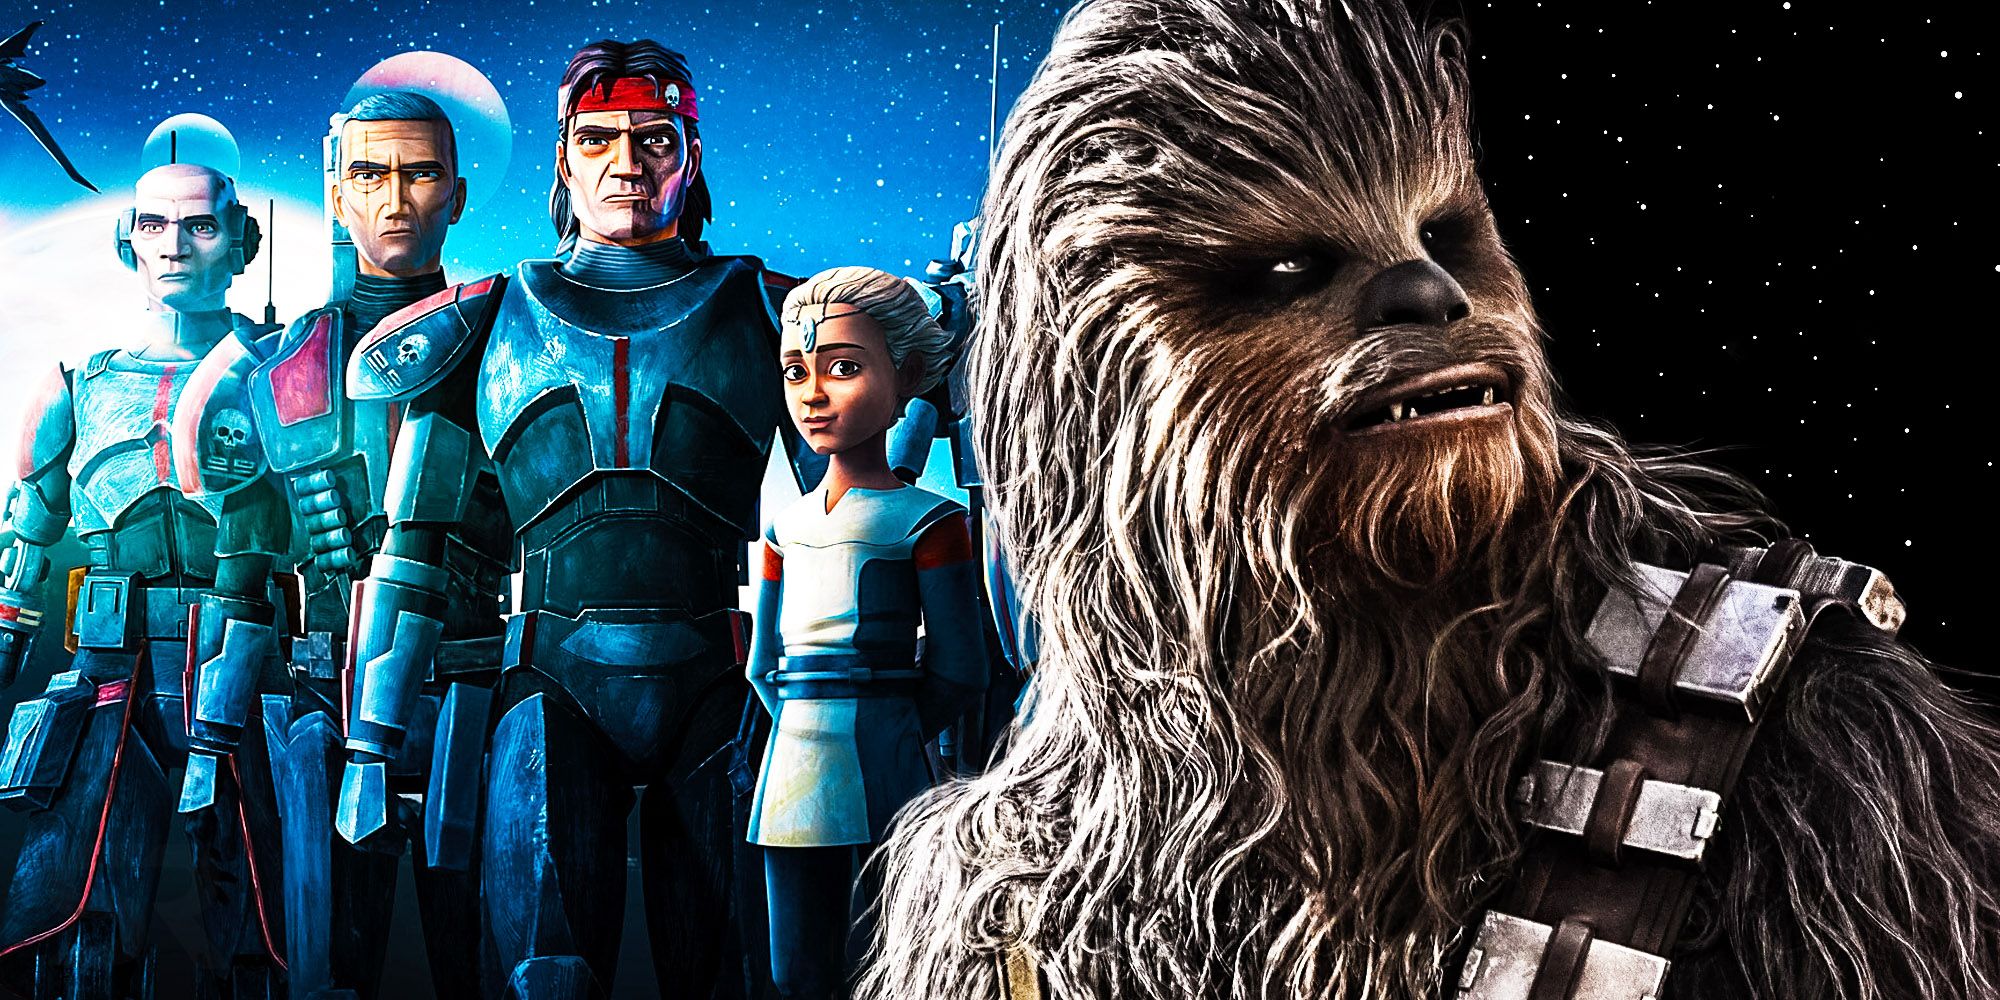 Star wars rise of skywalker chewbacca the bad batch season 2